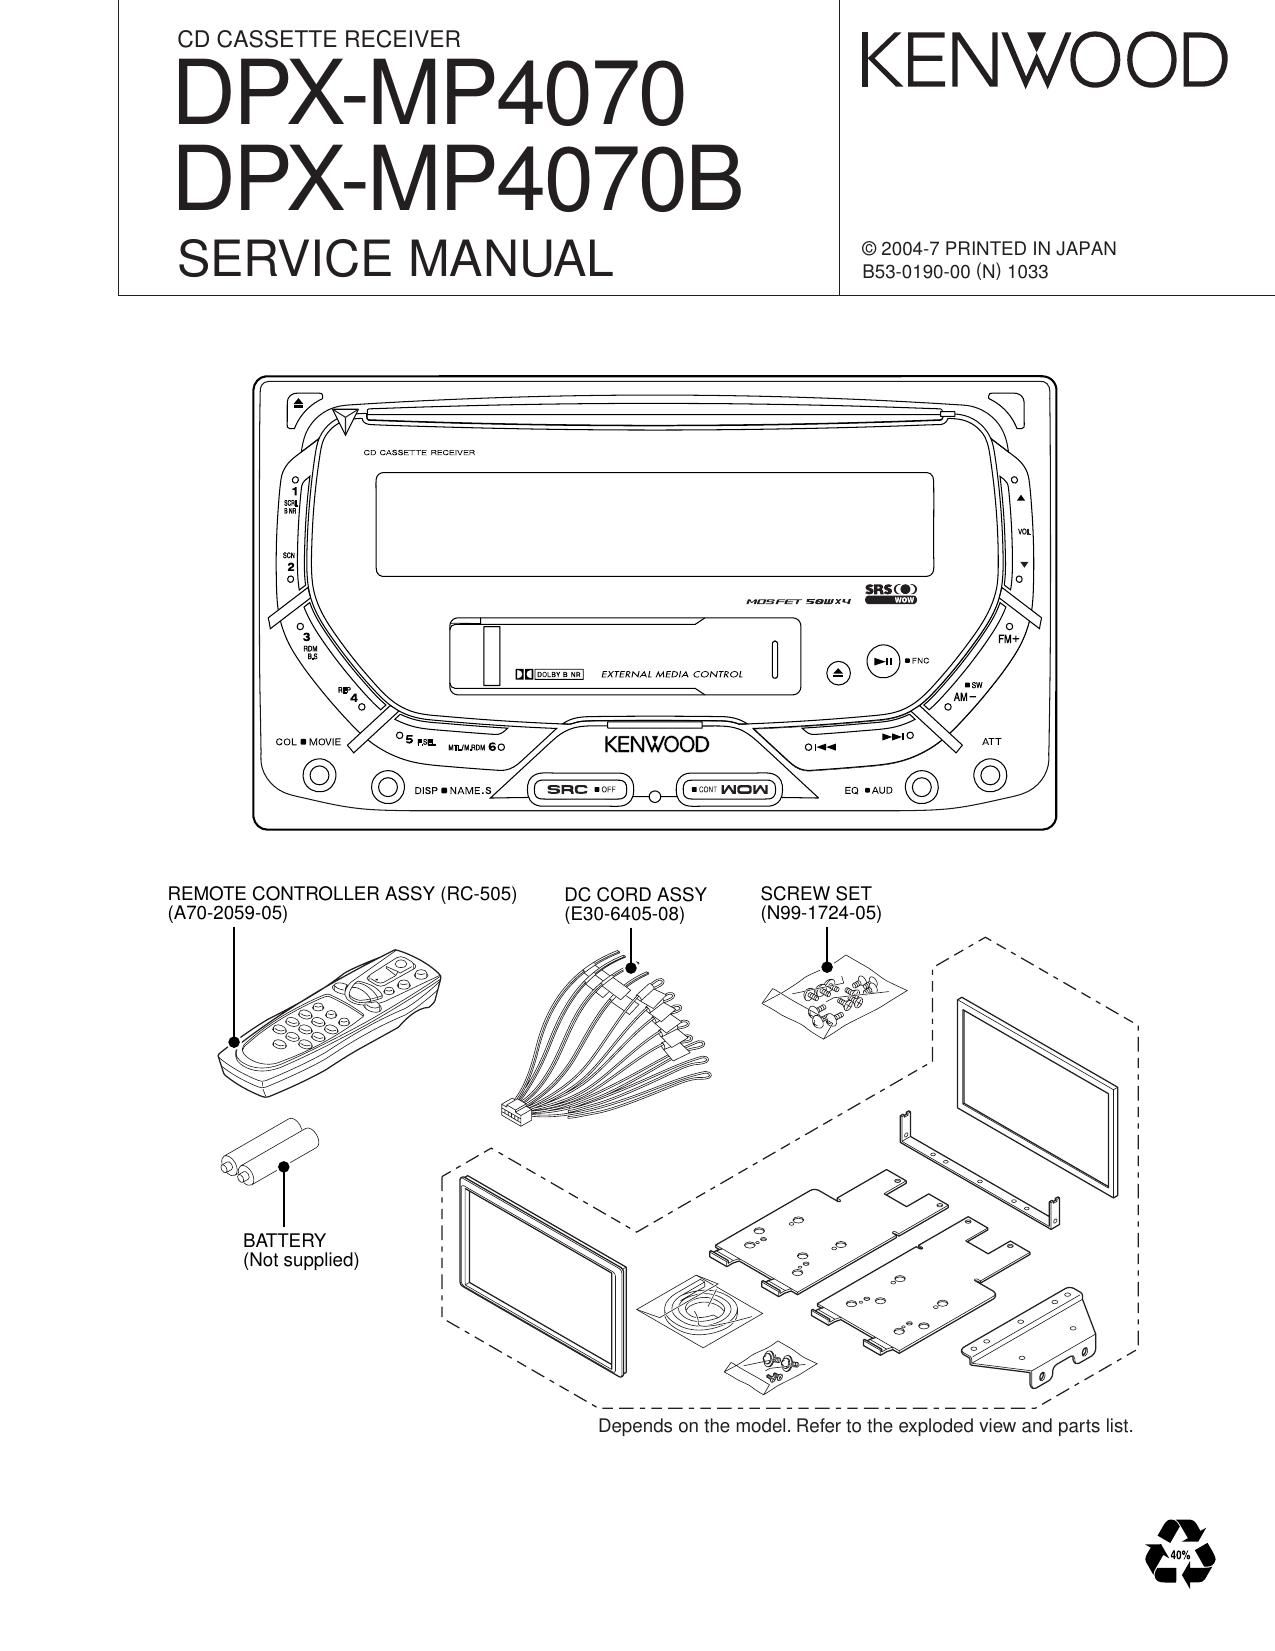 Kenwood DPXMP 4070 B Service Manual